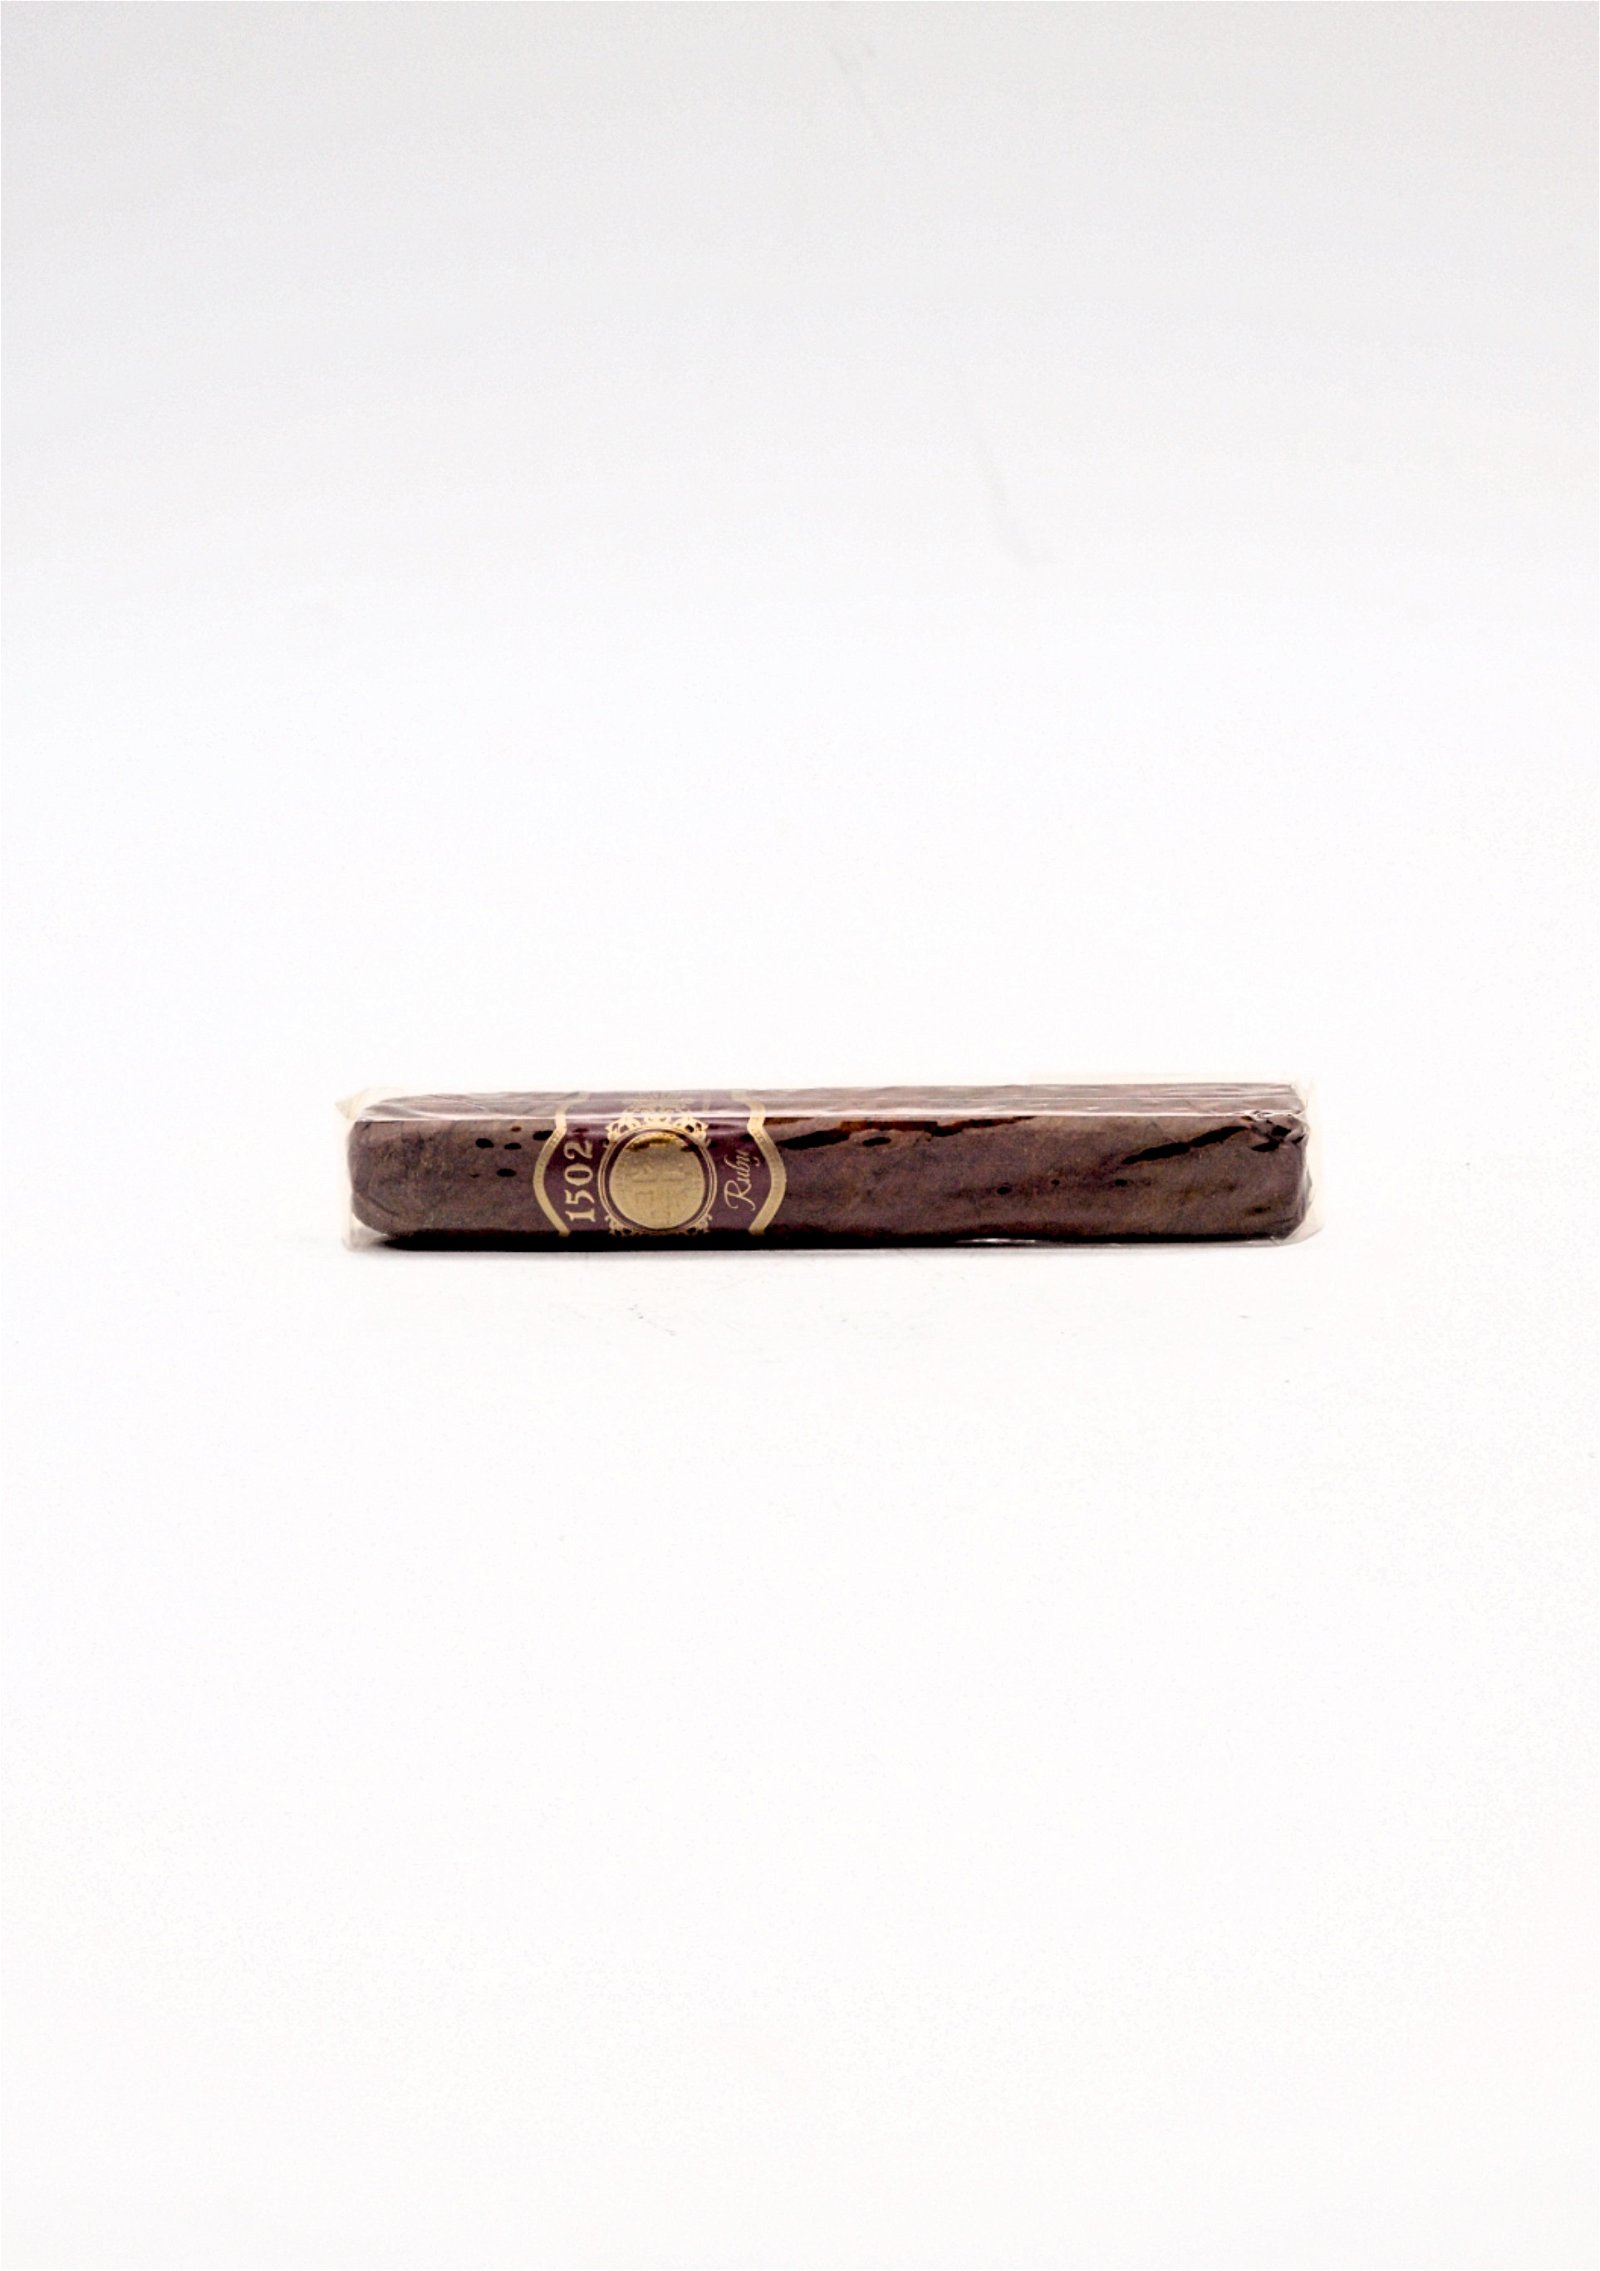 1502 Cigars Ruby Robusto